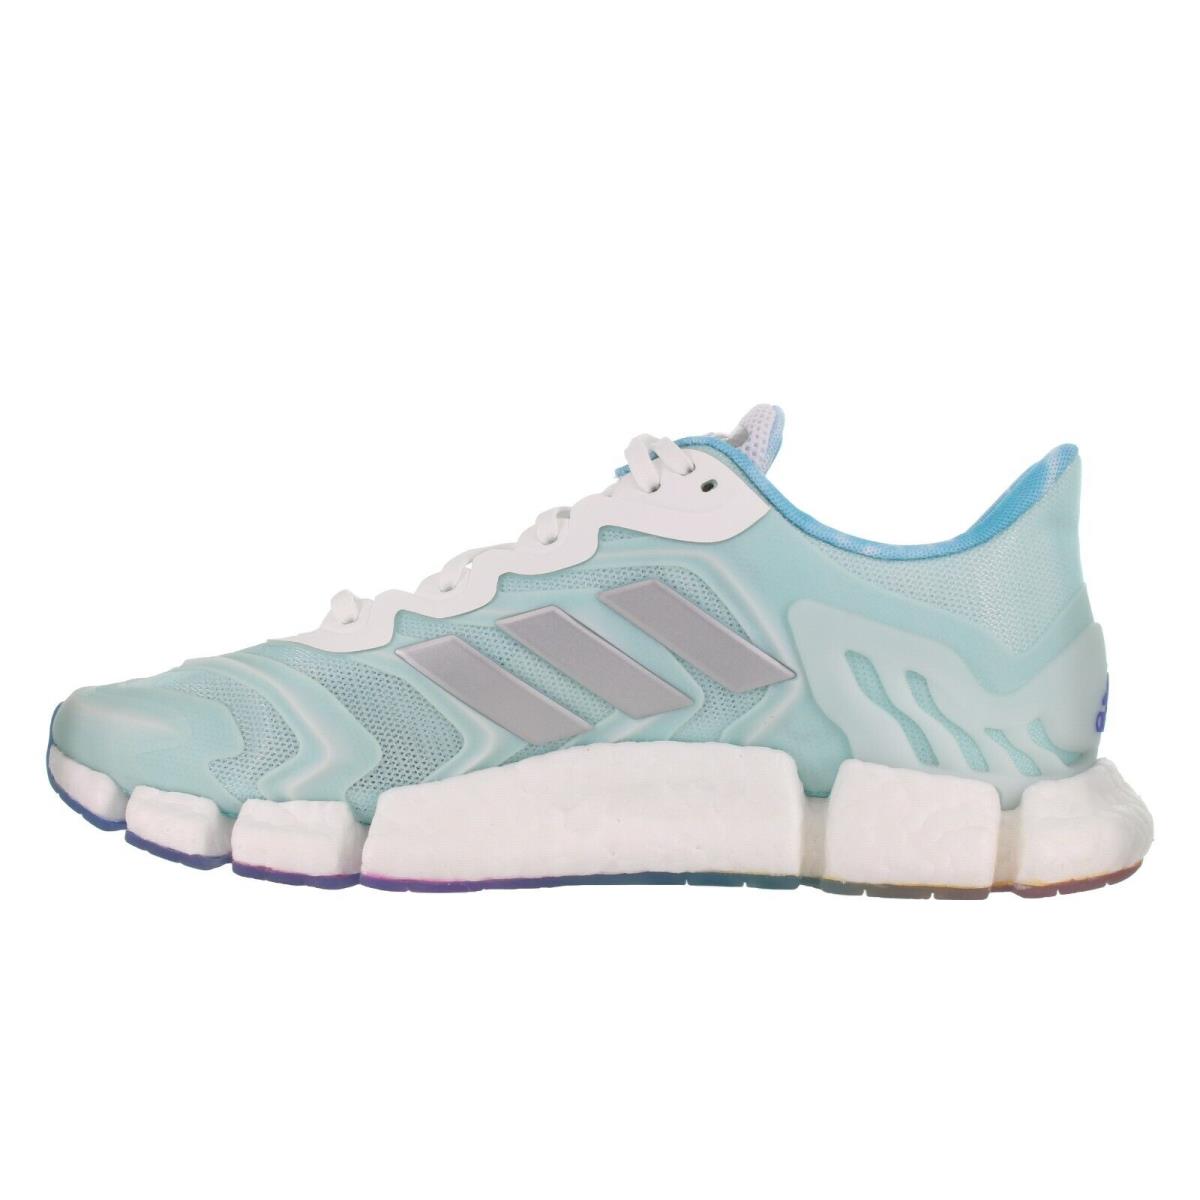 Adidas Men`s Climacool Vento White/aqua Training Shoes Multiple Size - Cloud White, Pulse Aqua, Silver Metallic